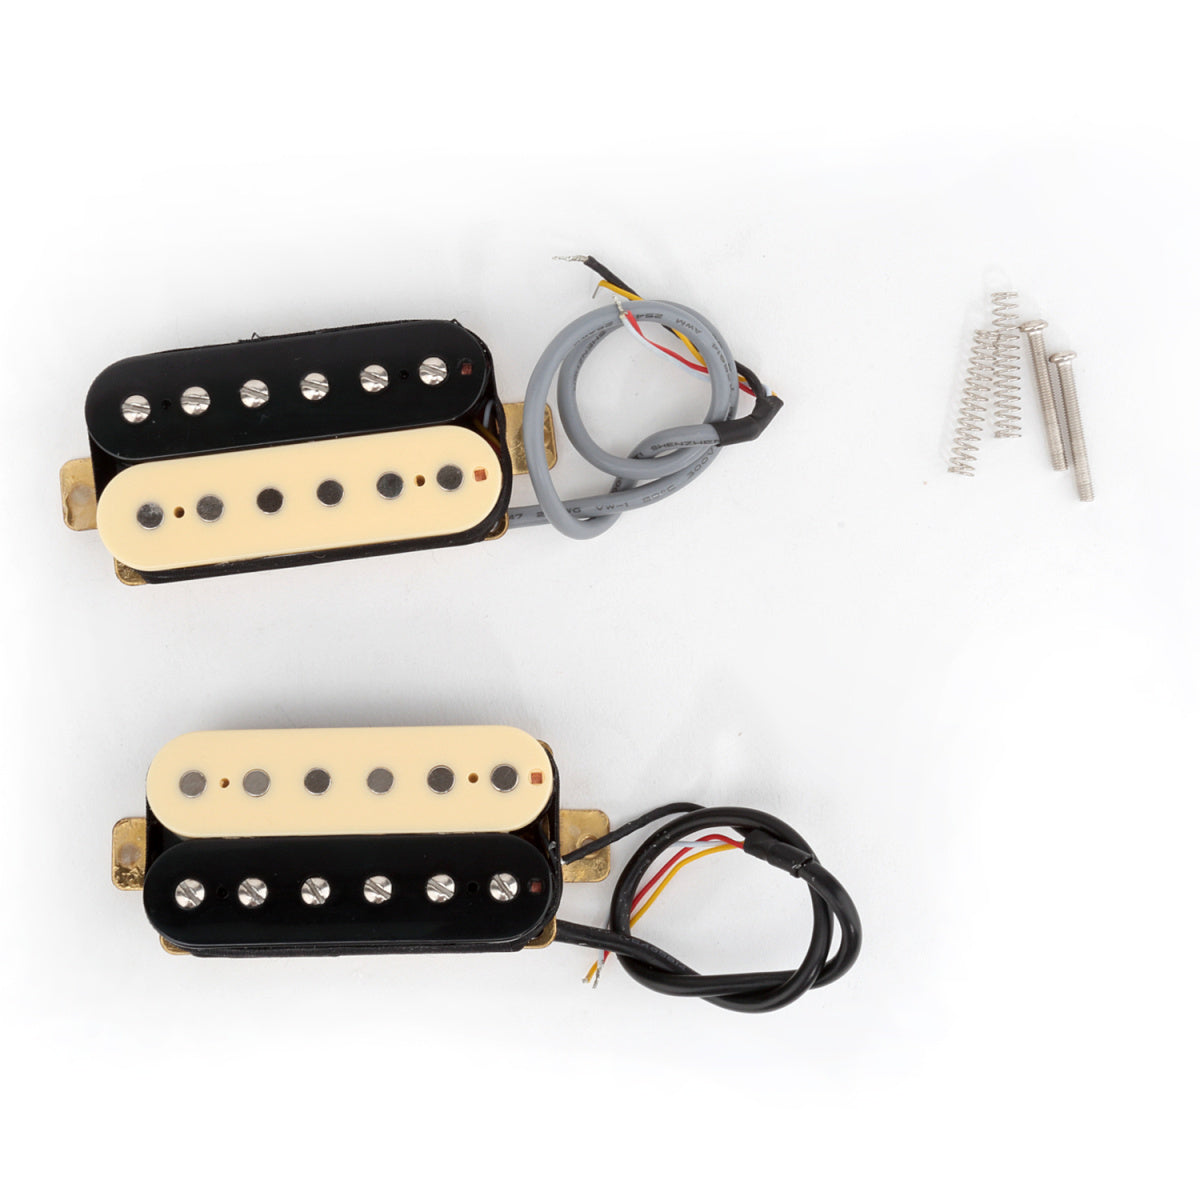 Musiclily Pro 50mm Neck & 52mm Bridge Humbucker Pickups Set for Electric Guitar, Zebra